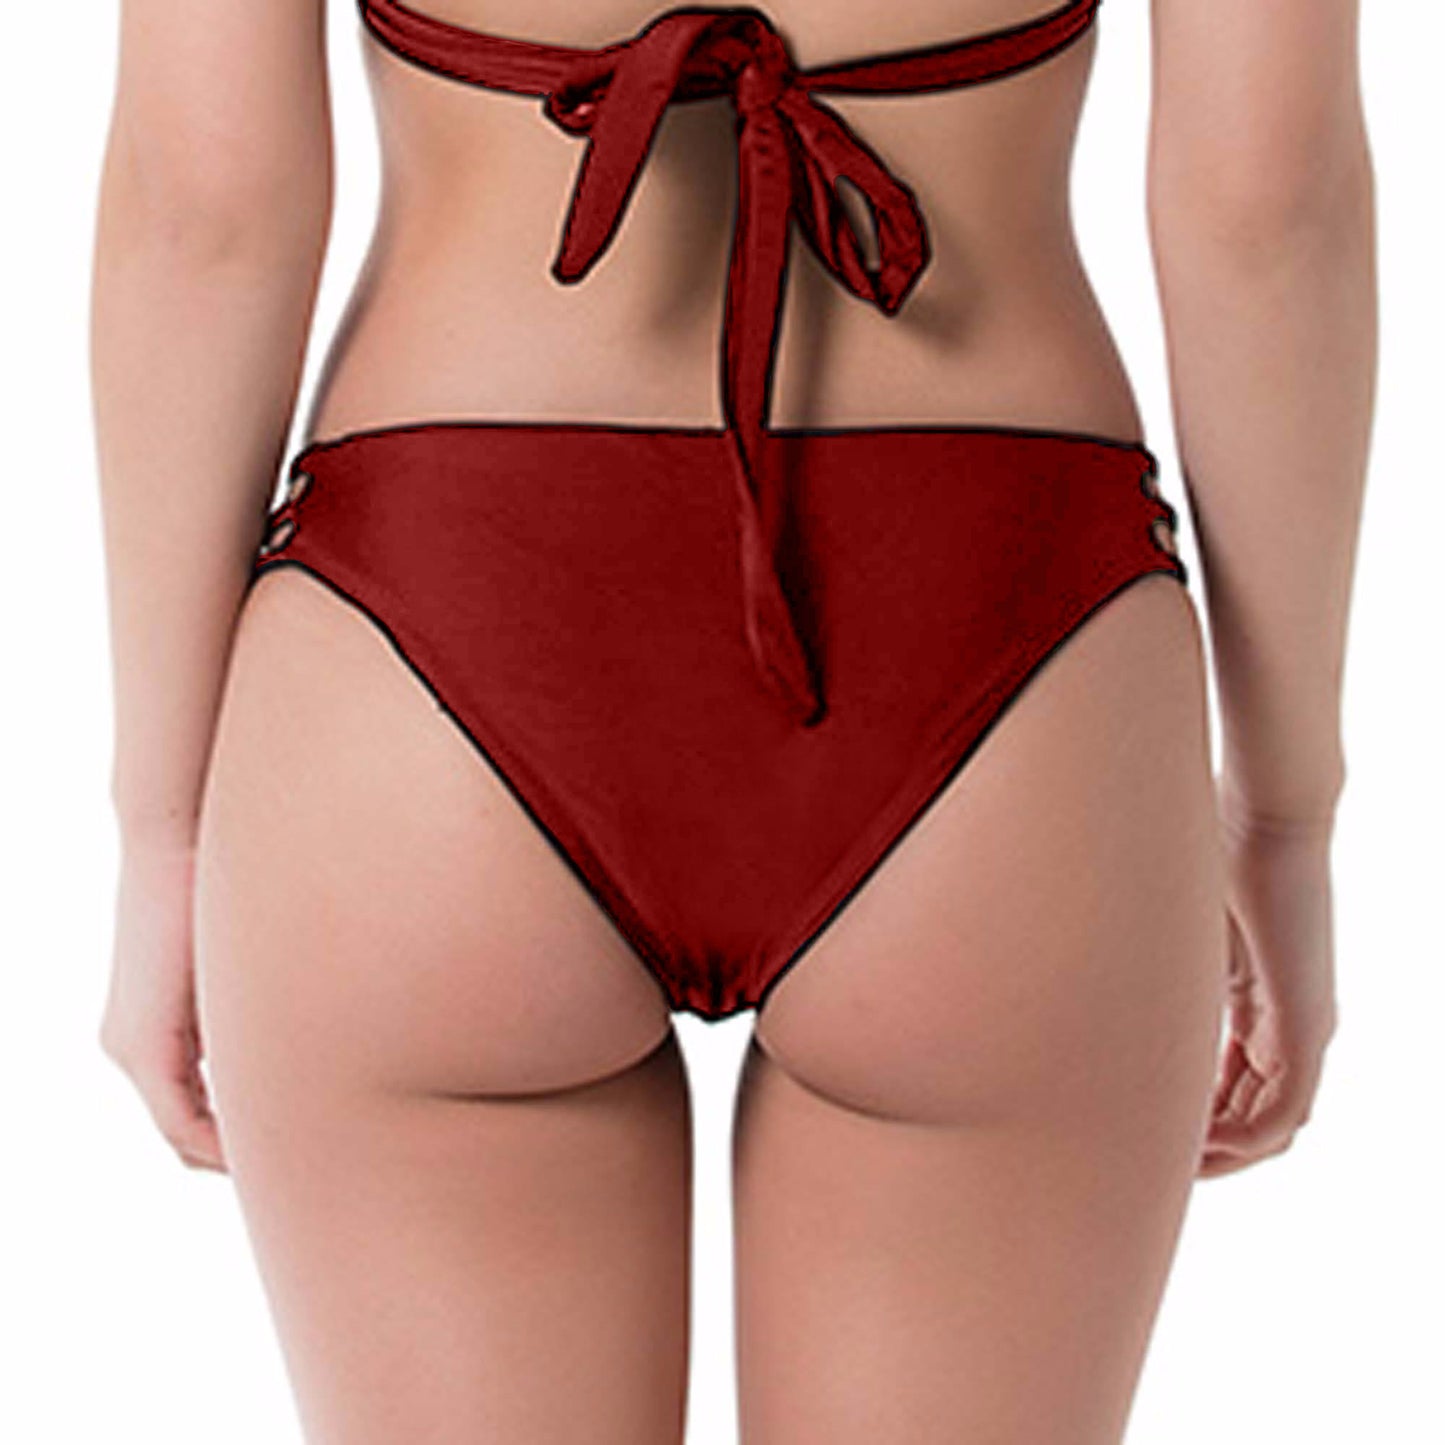 Cheeky strappy bikini bottom